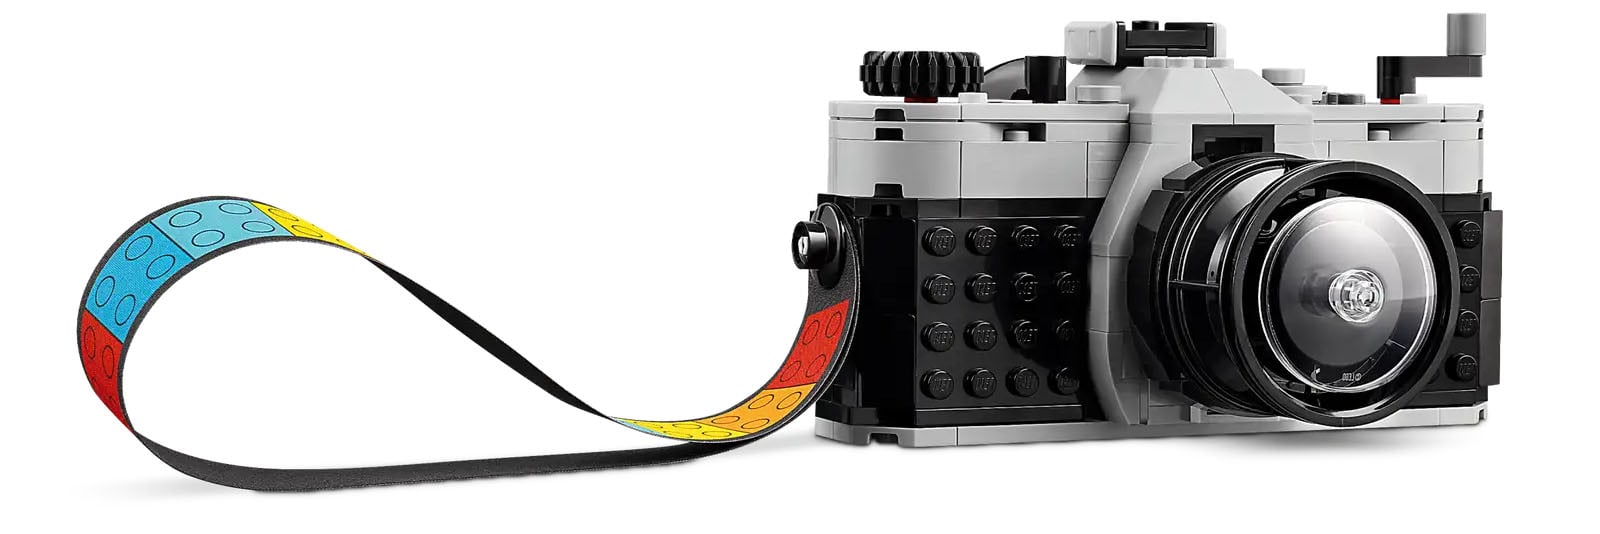 LEGO Retro Camera 3-in-1 Creator Set